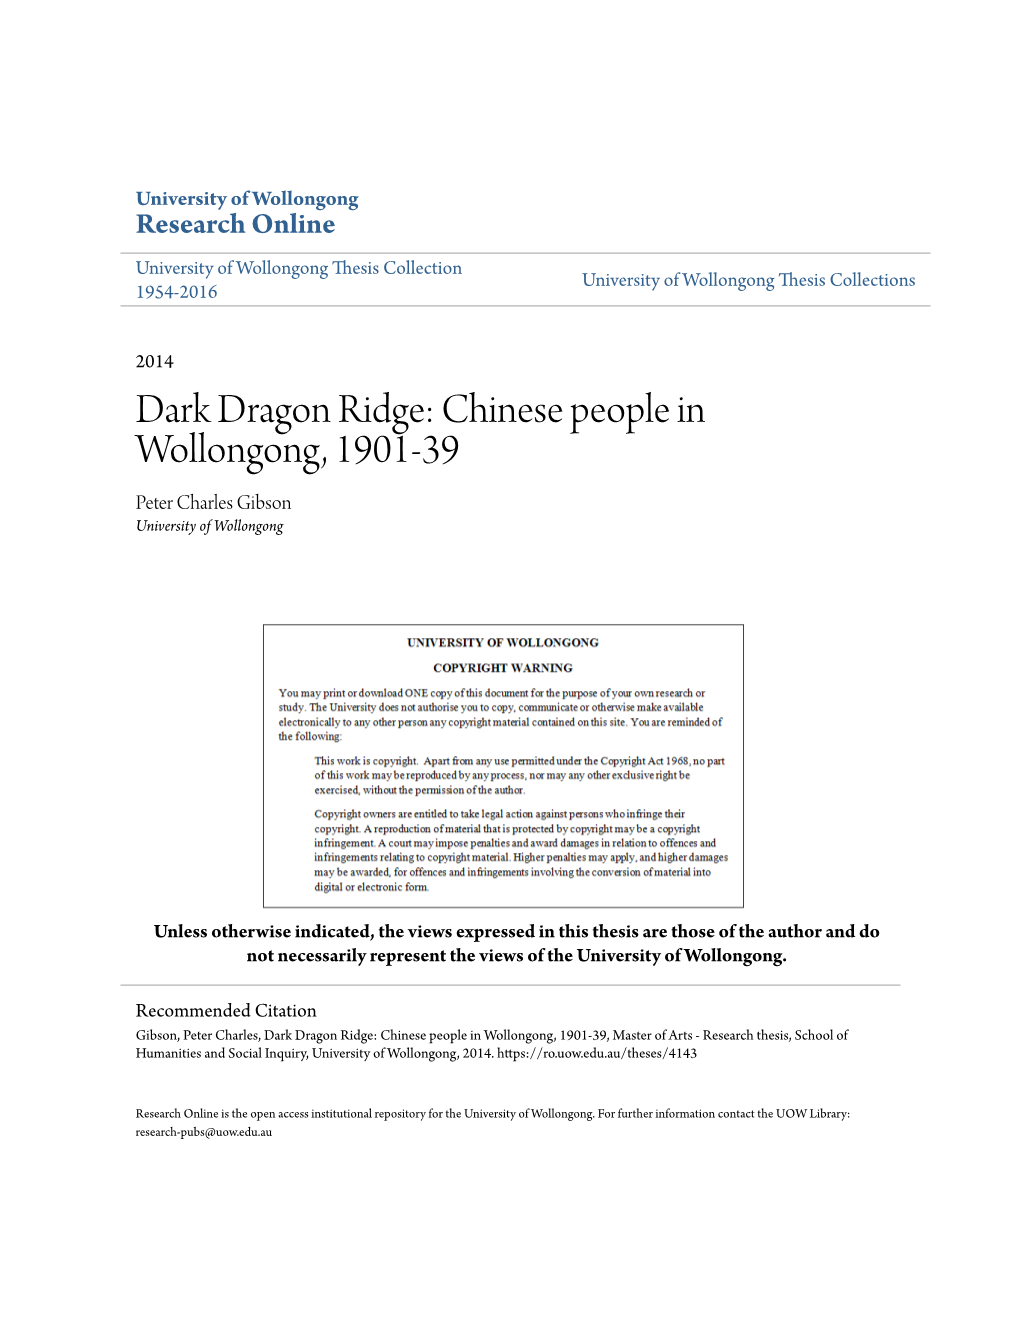 Dark Dragon Ridge: Chinese People in Wollongong, 1901-39 Peter Charles Gibson University of Wollongong